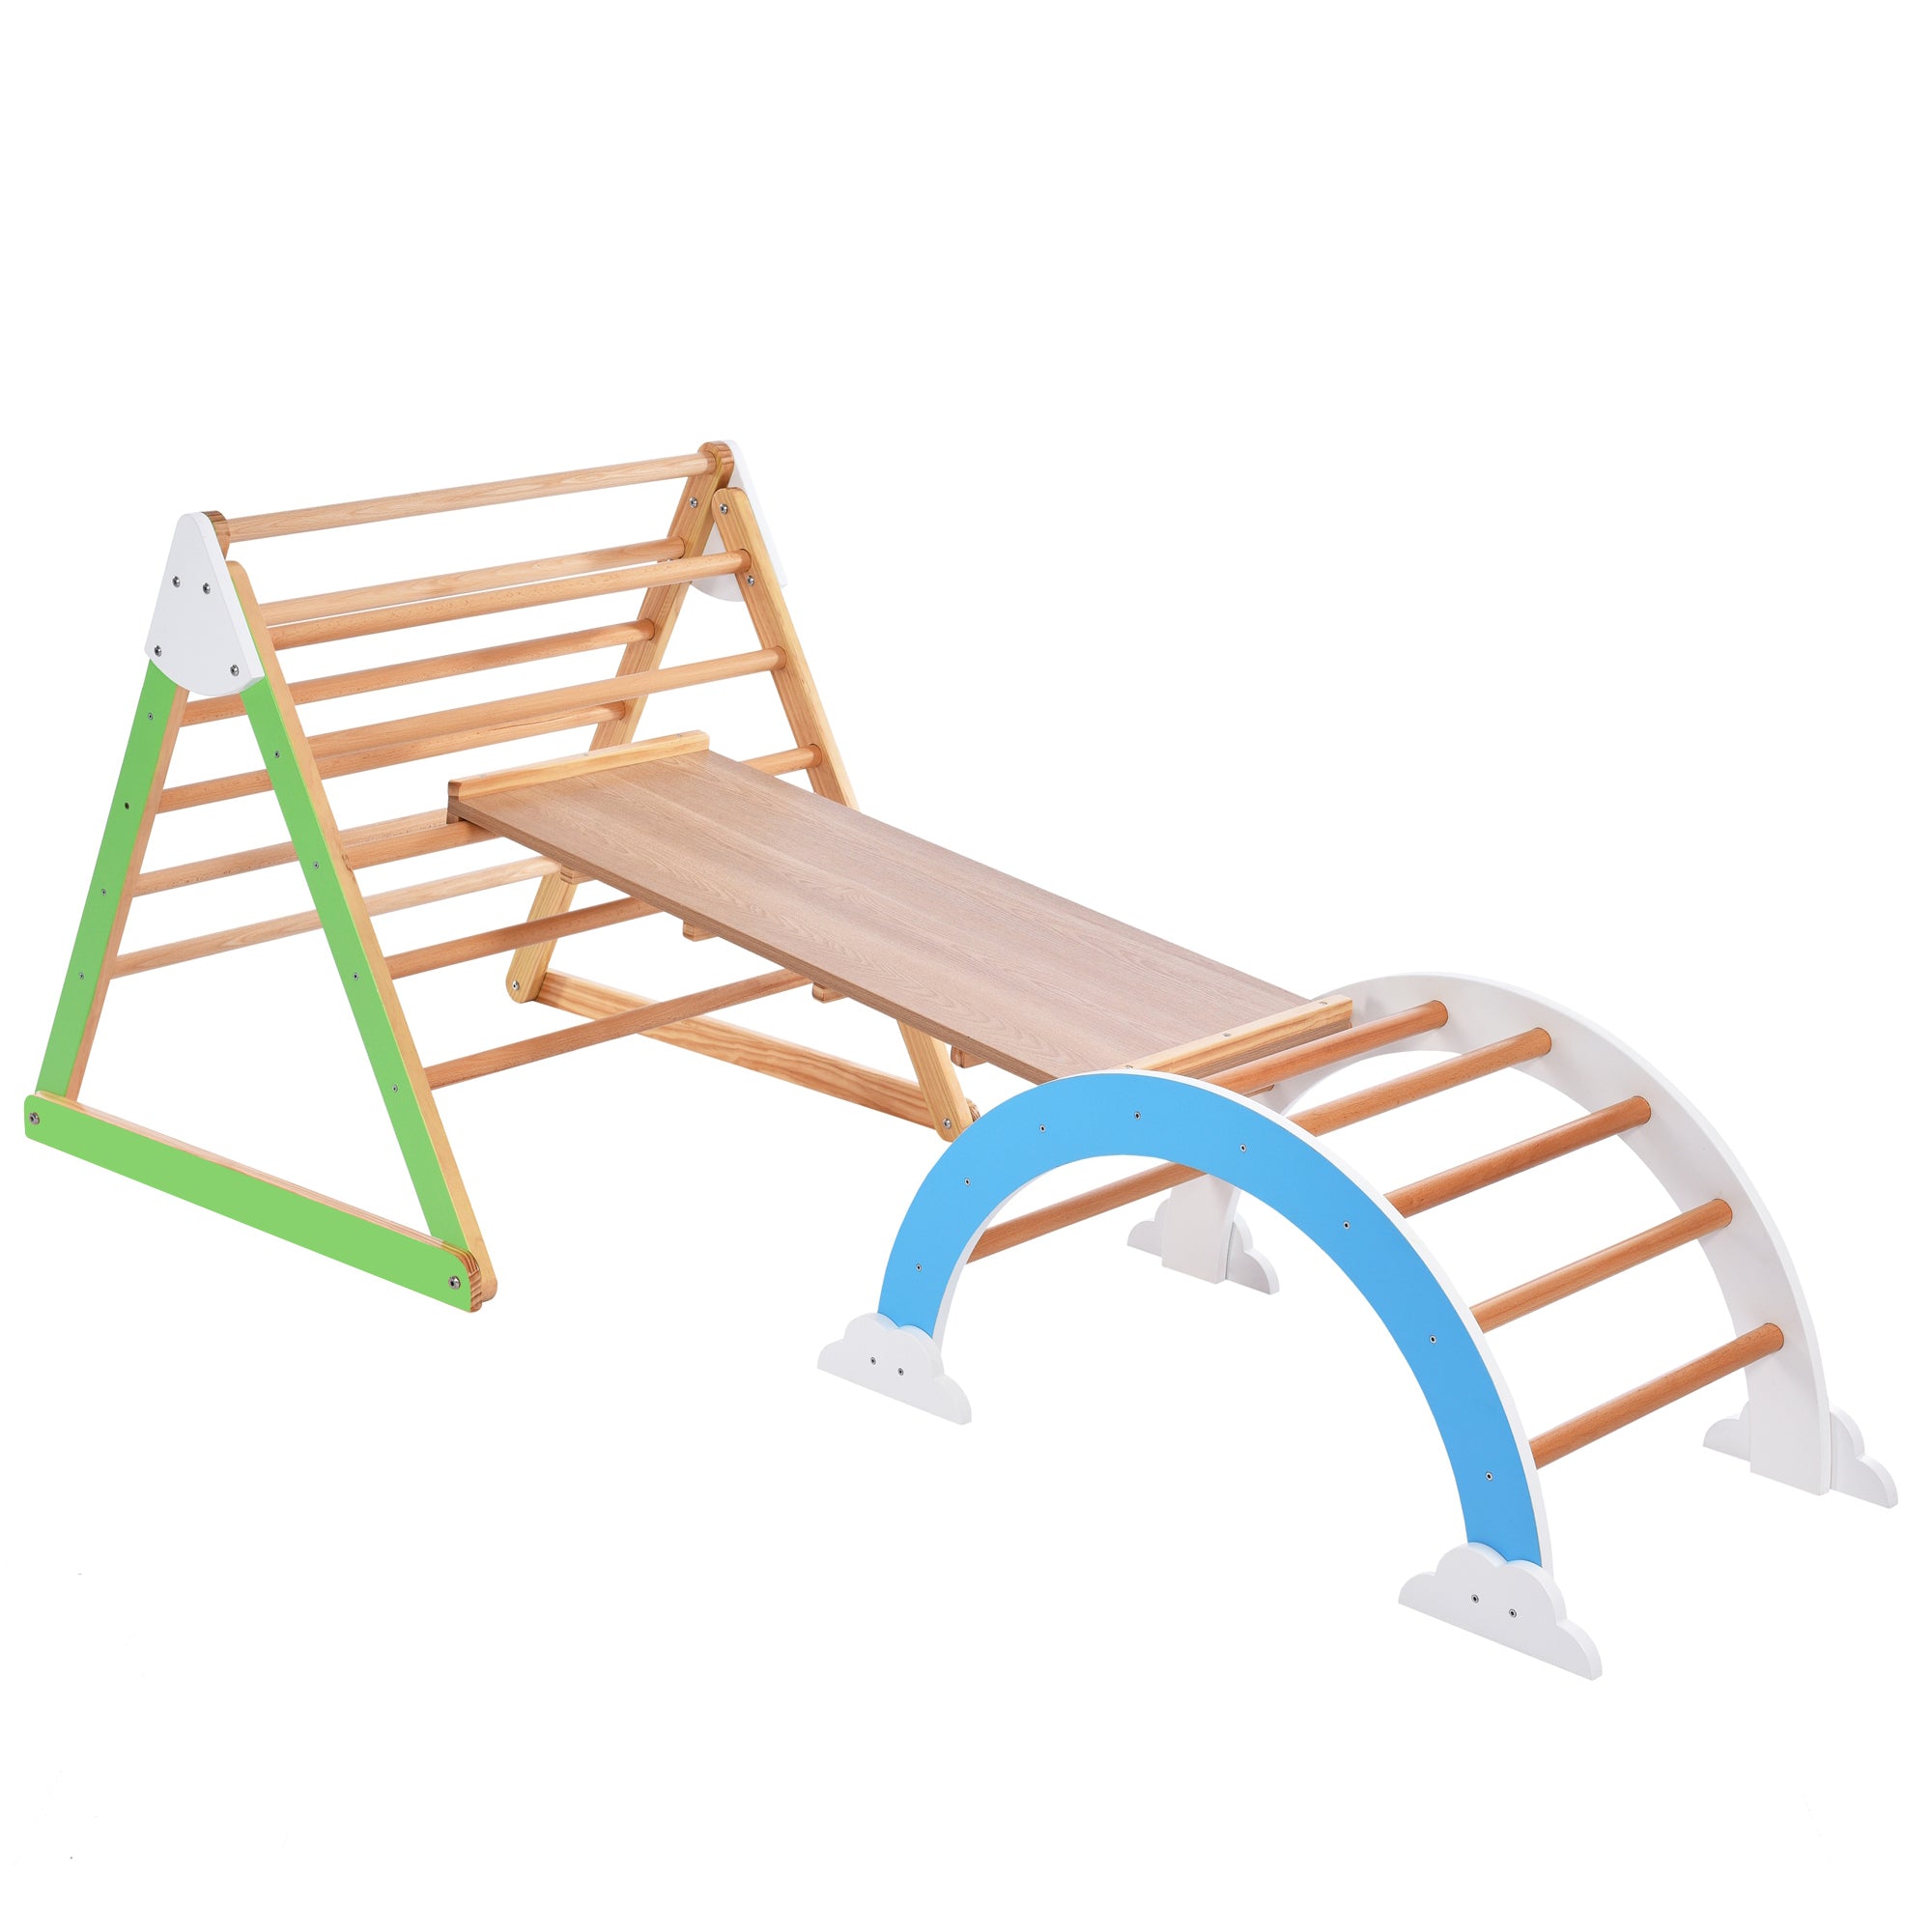 Wooden Climbing Triangle Toys Indoor Arc Climber